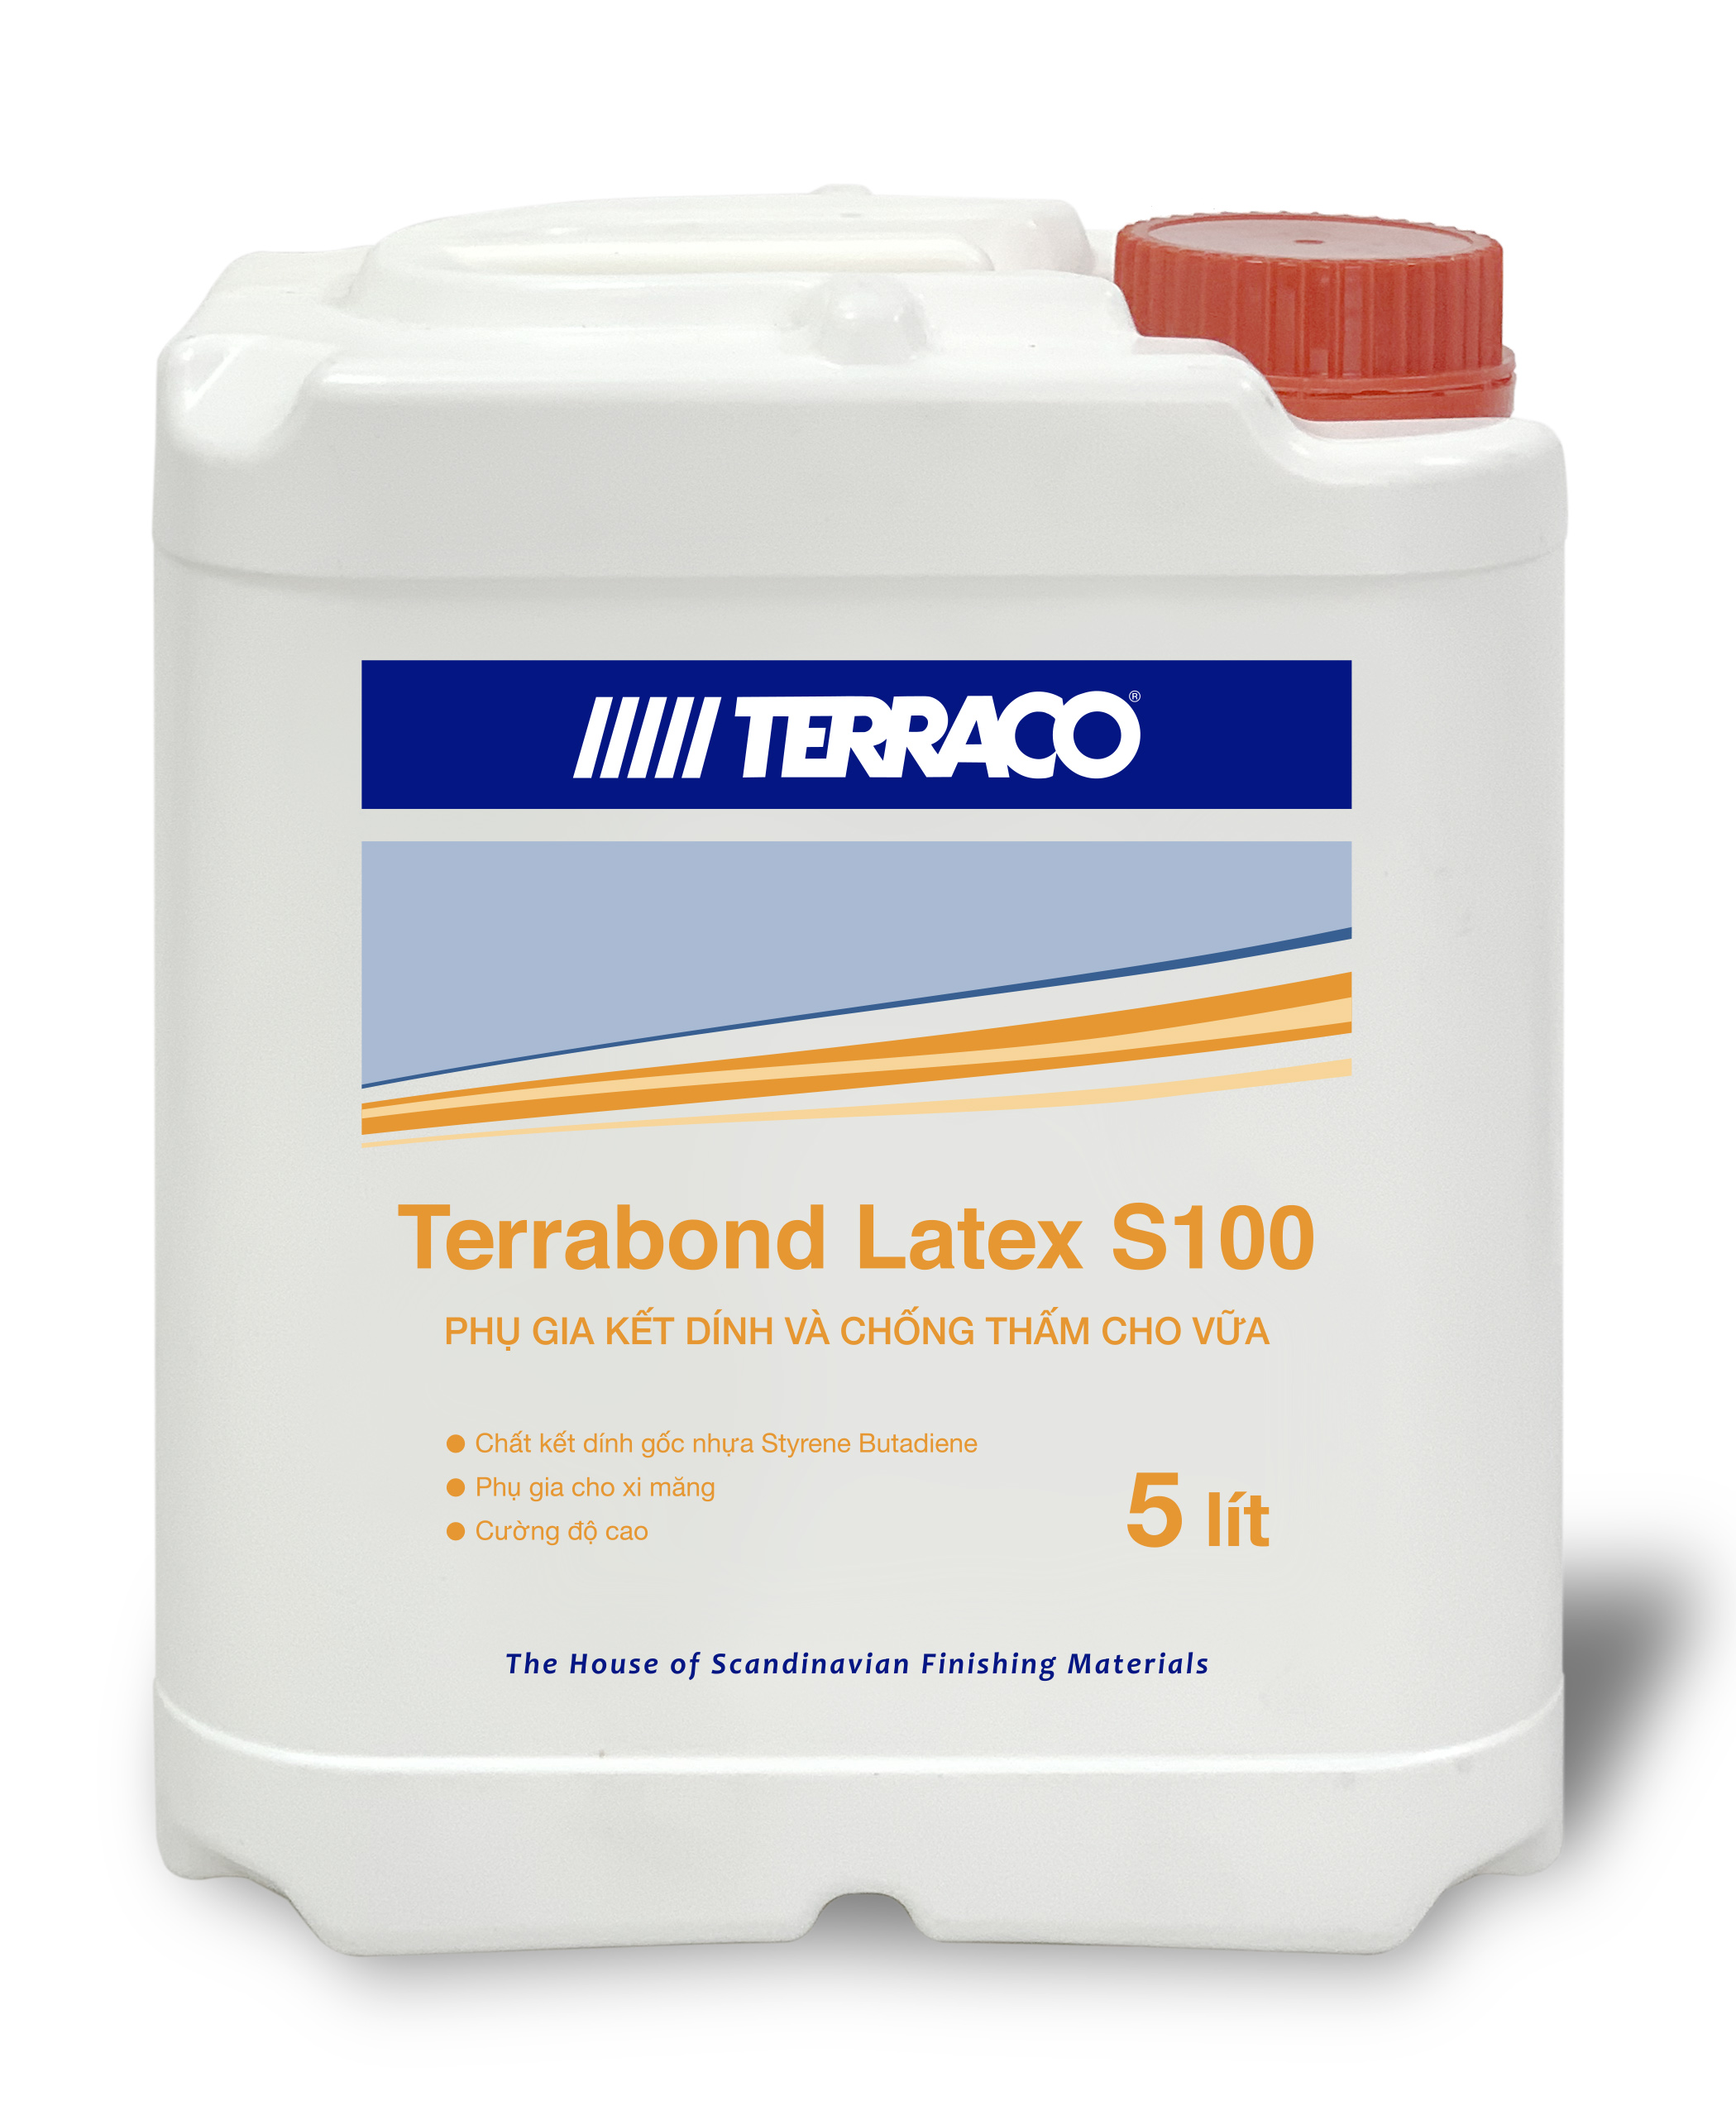 Terrabond Latex S100